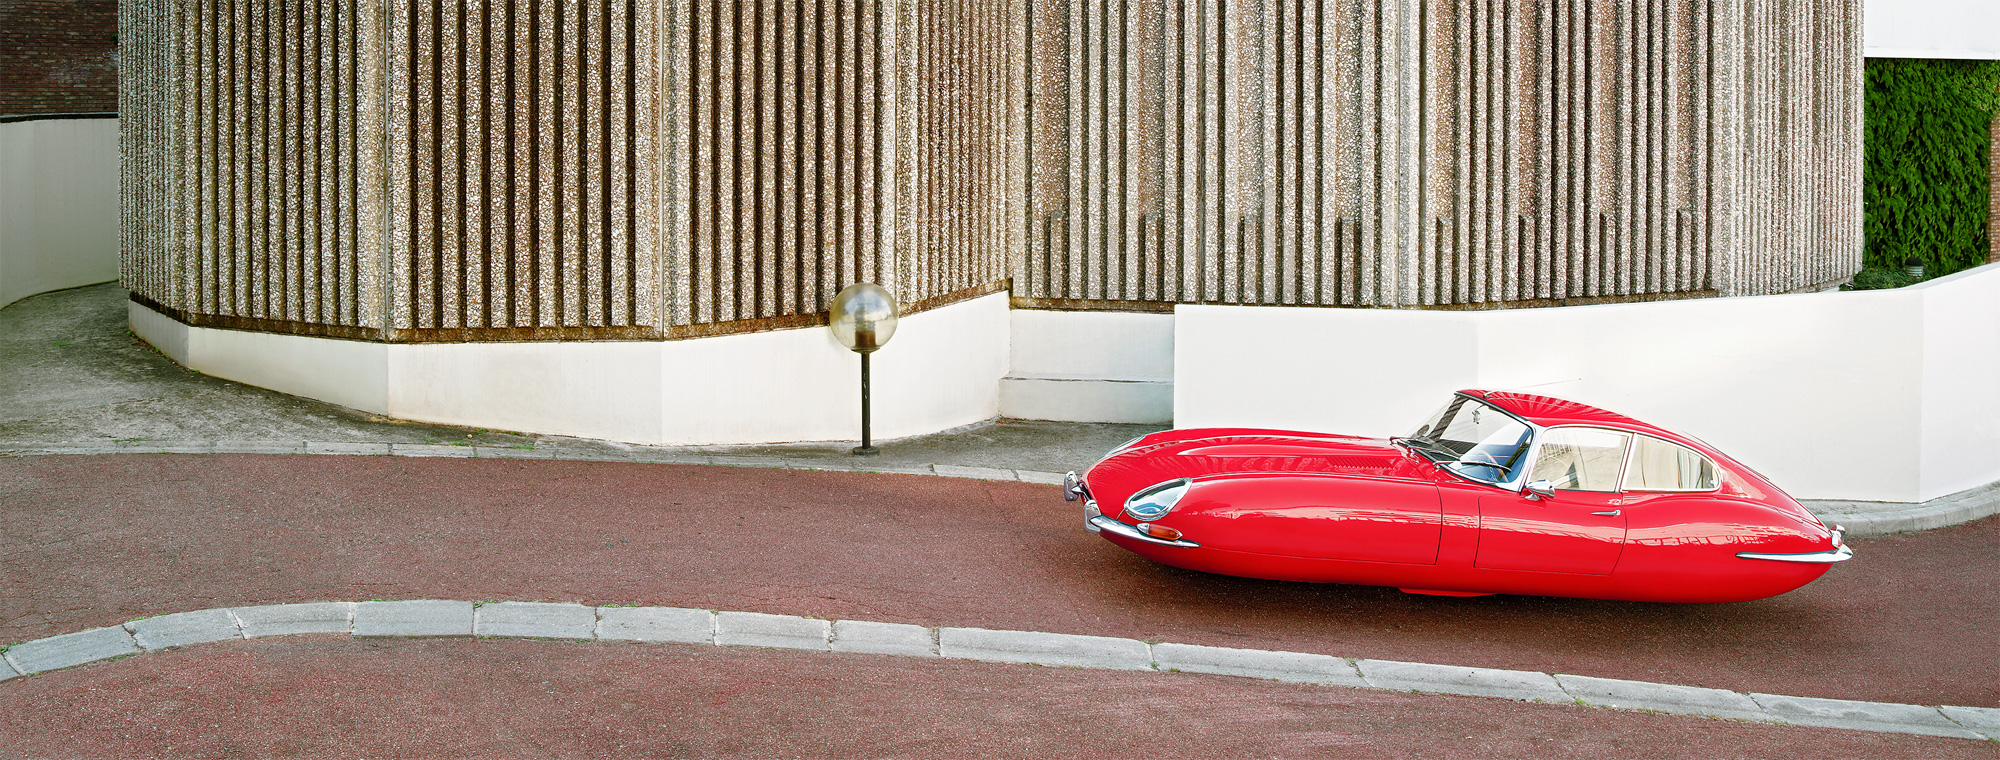 Floating luxury cars de Renaud Marion